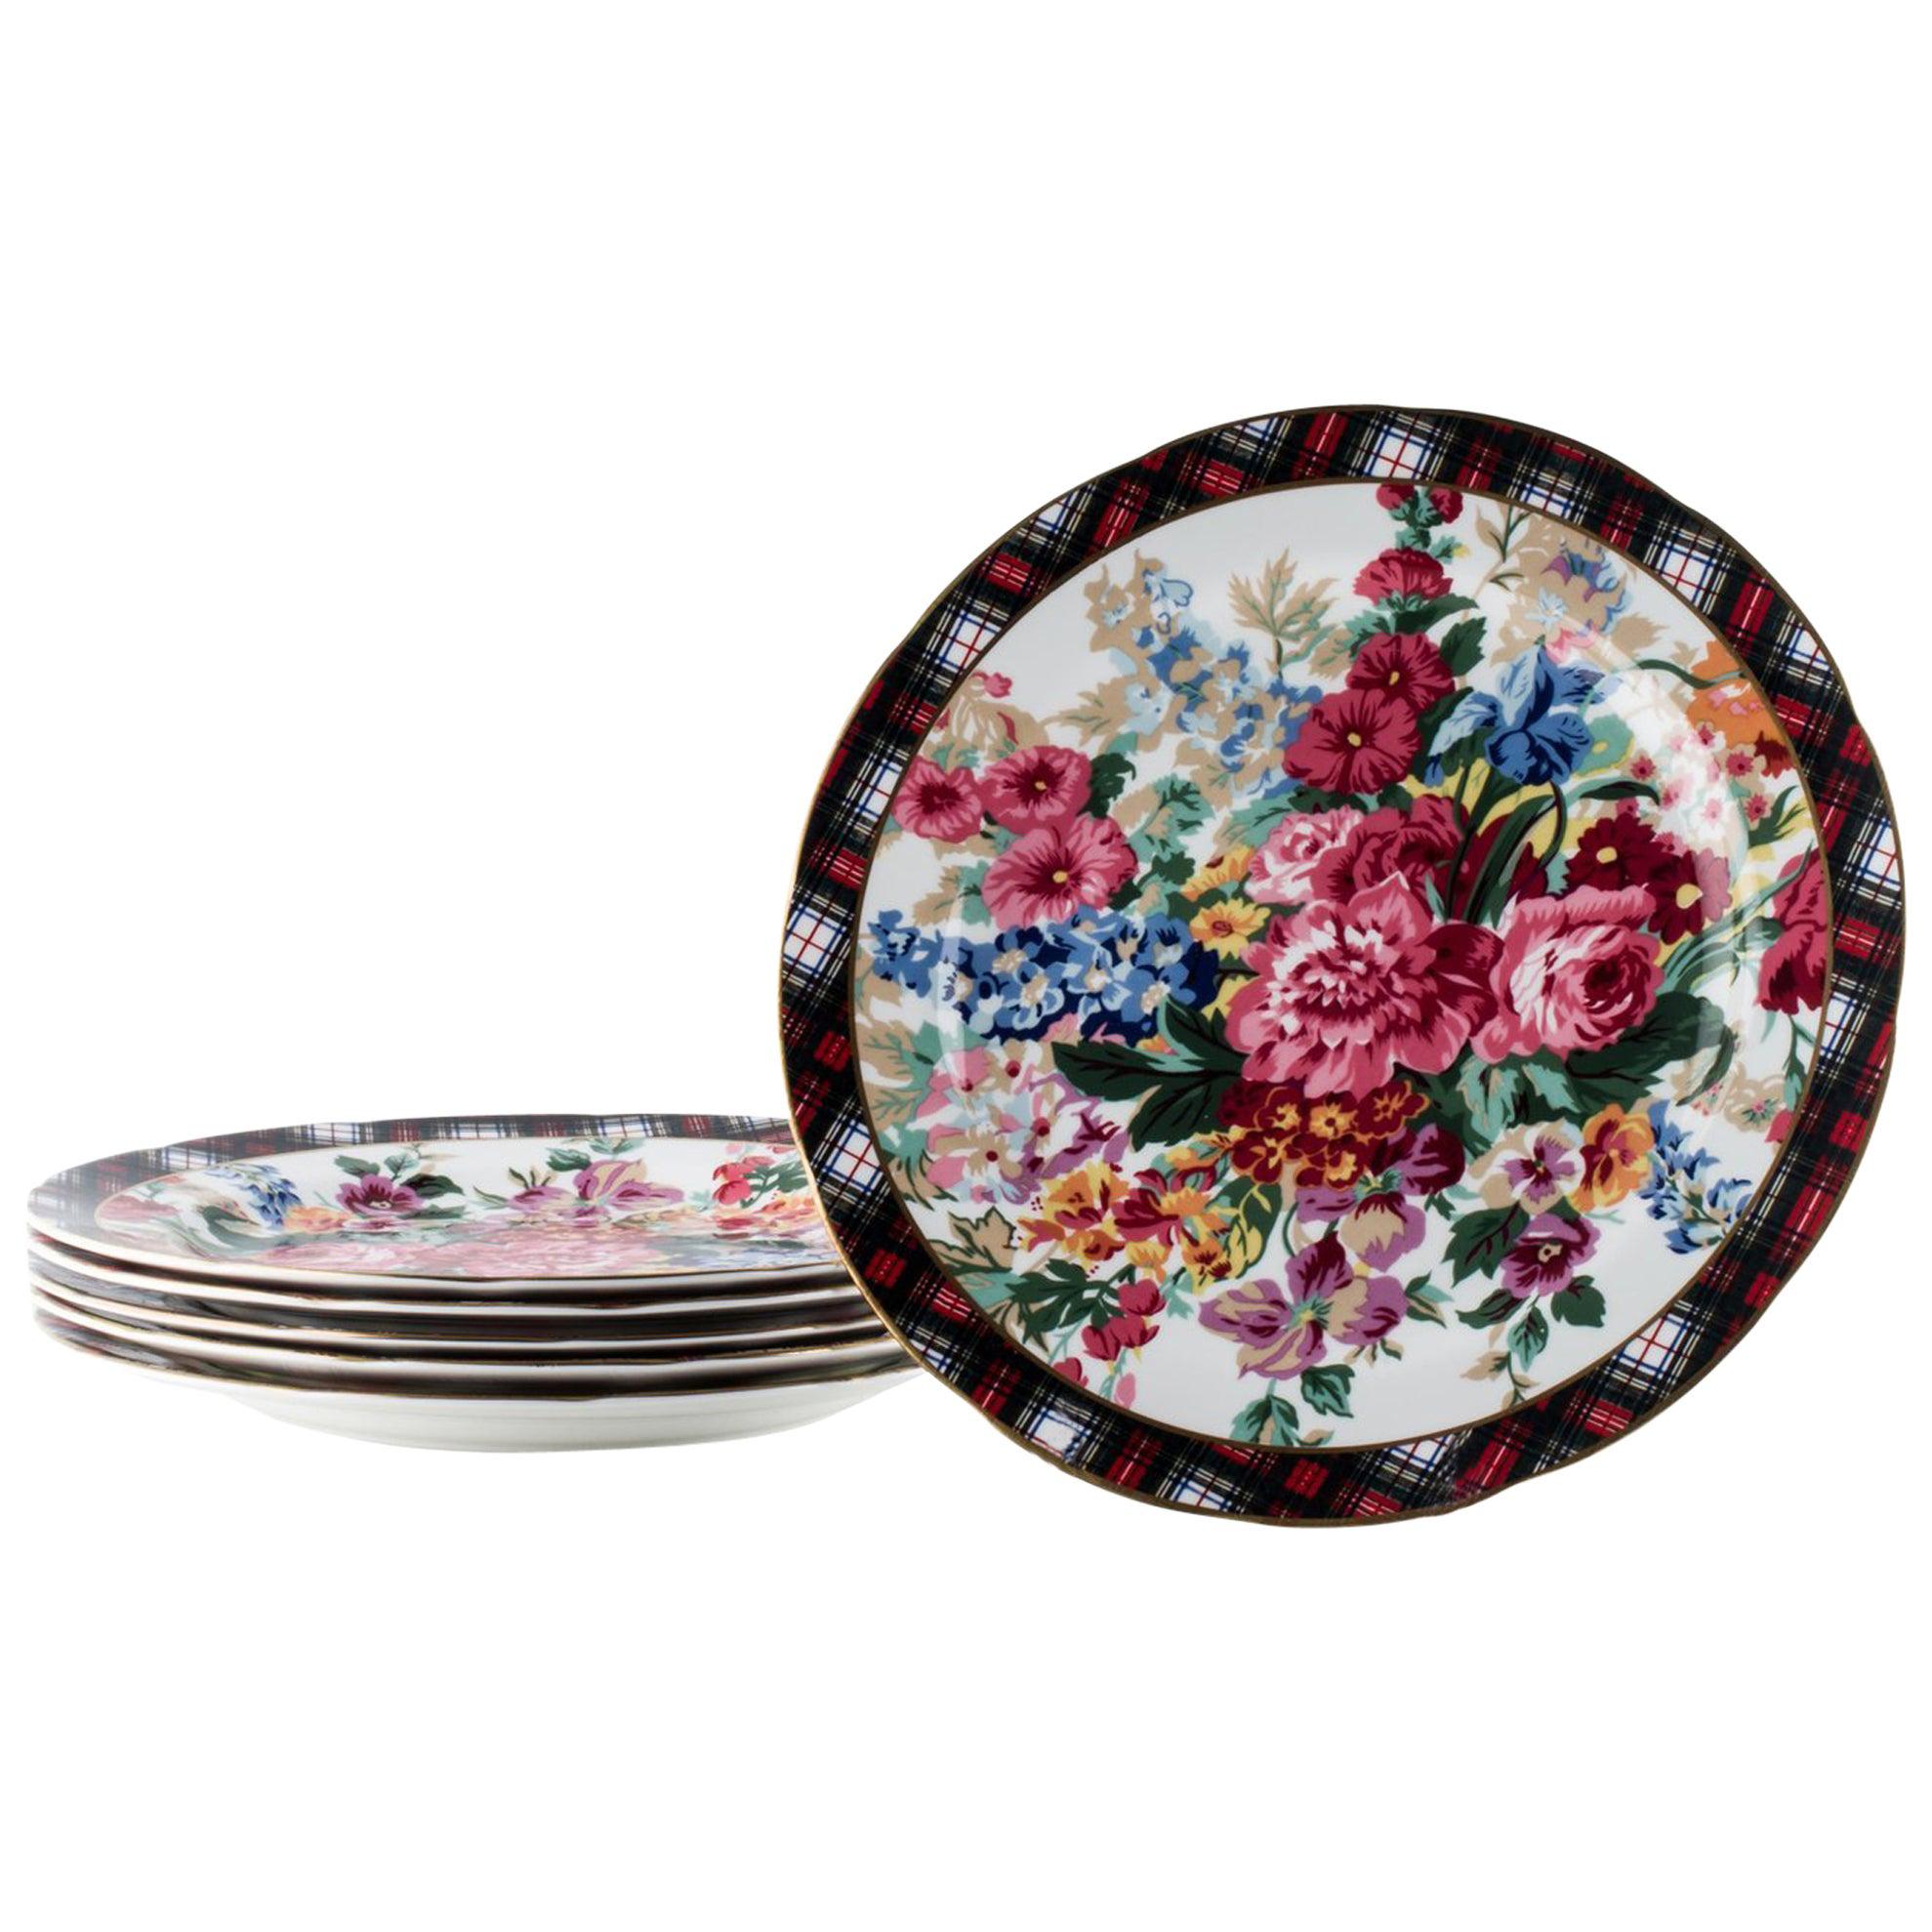 Ralph Lauren Home Hampton Floral Dishes ~ 12 Place Settings Set